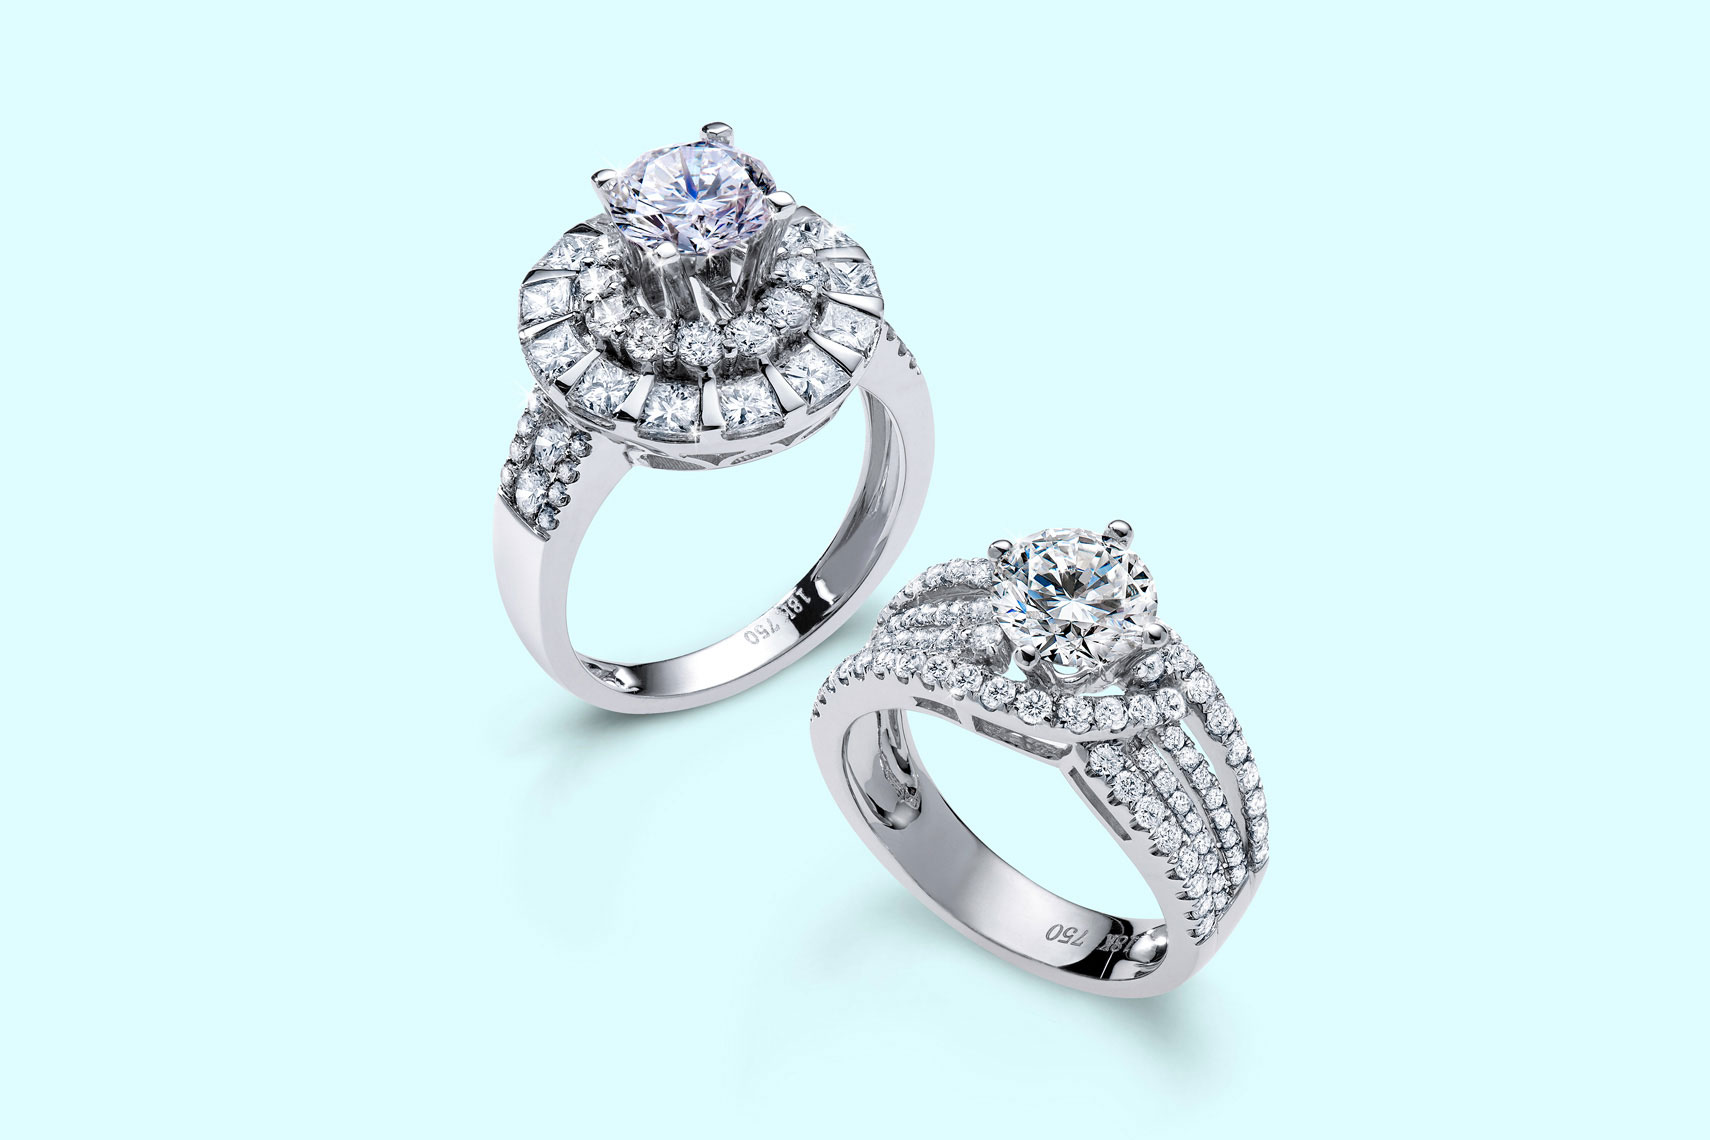 069_P032_product_shot_jewelry_diamond_rings